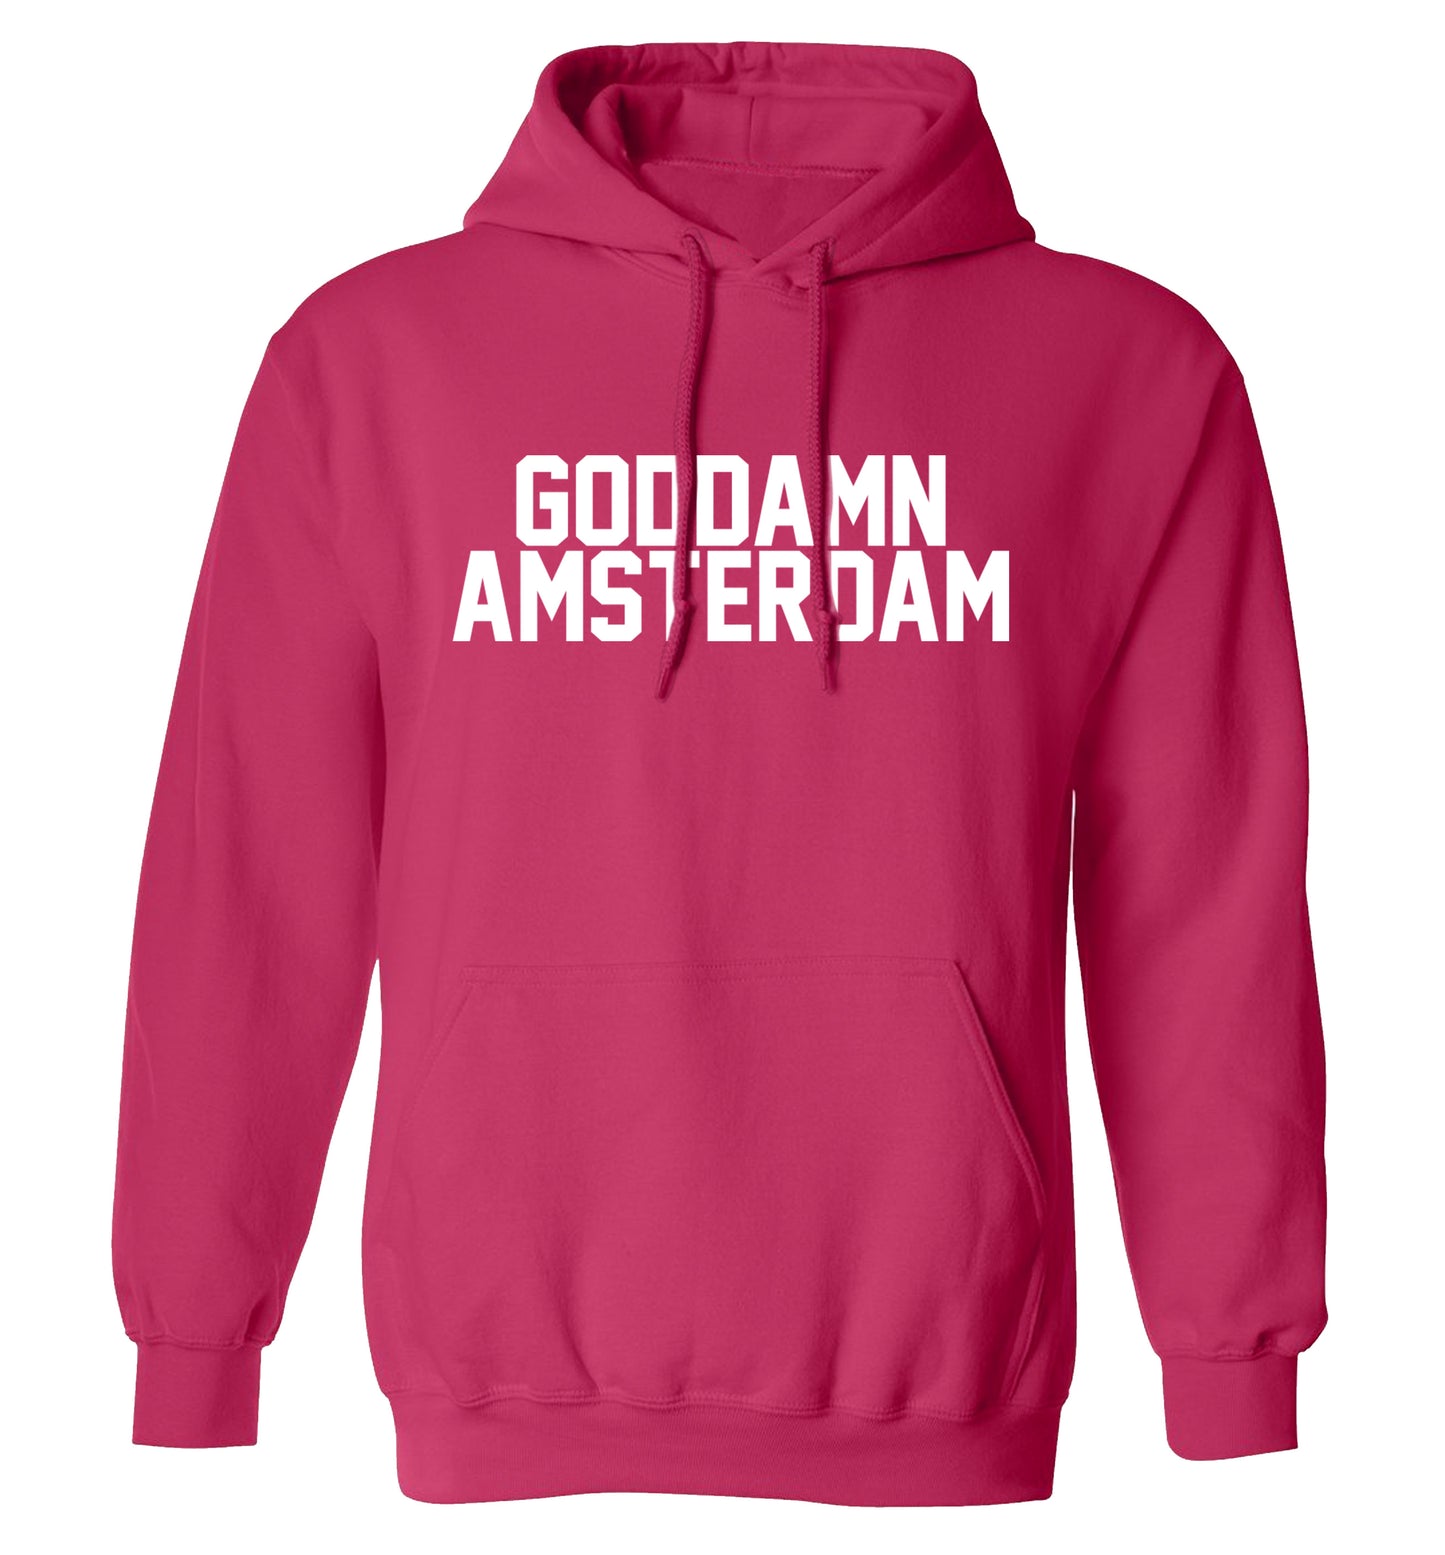 Goddamn Amsterdam adults unisex pink hoodie 2XL